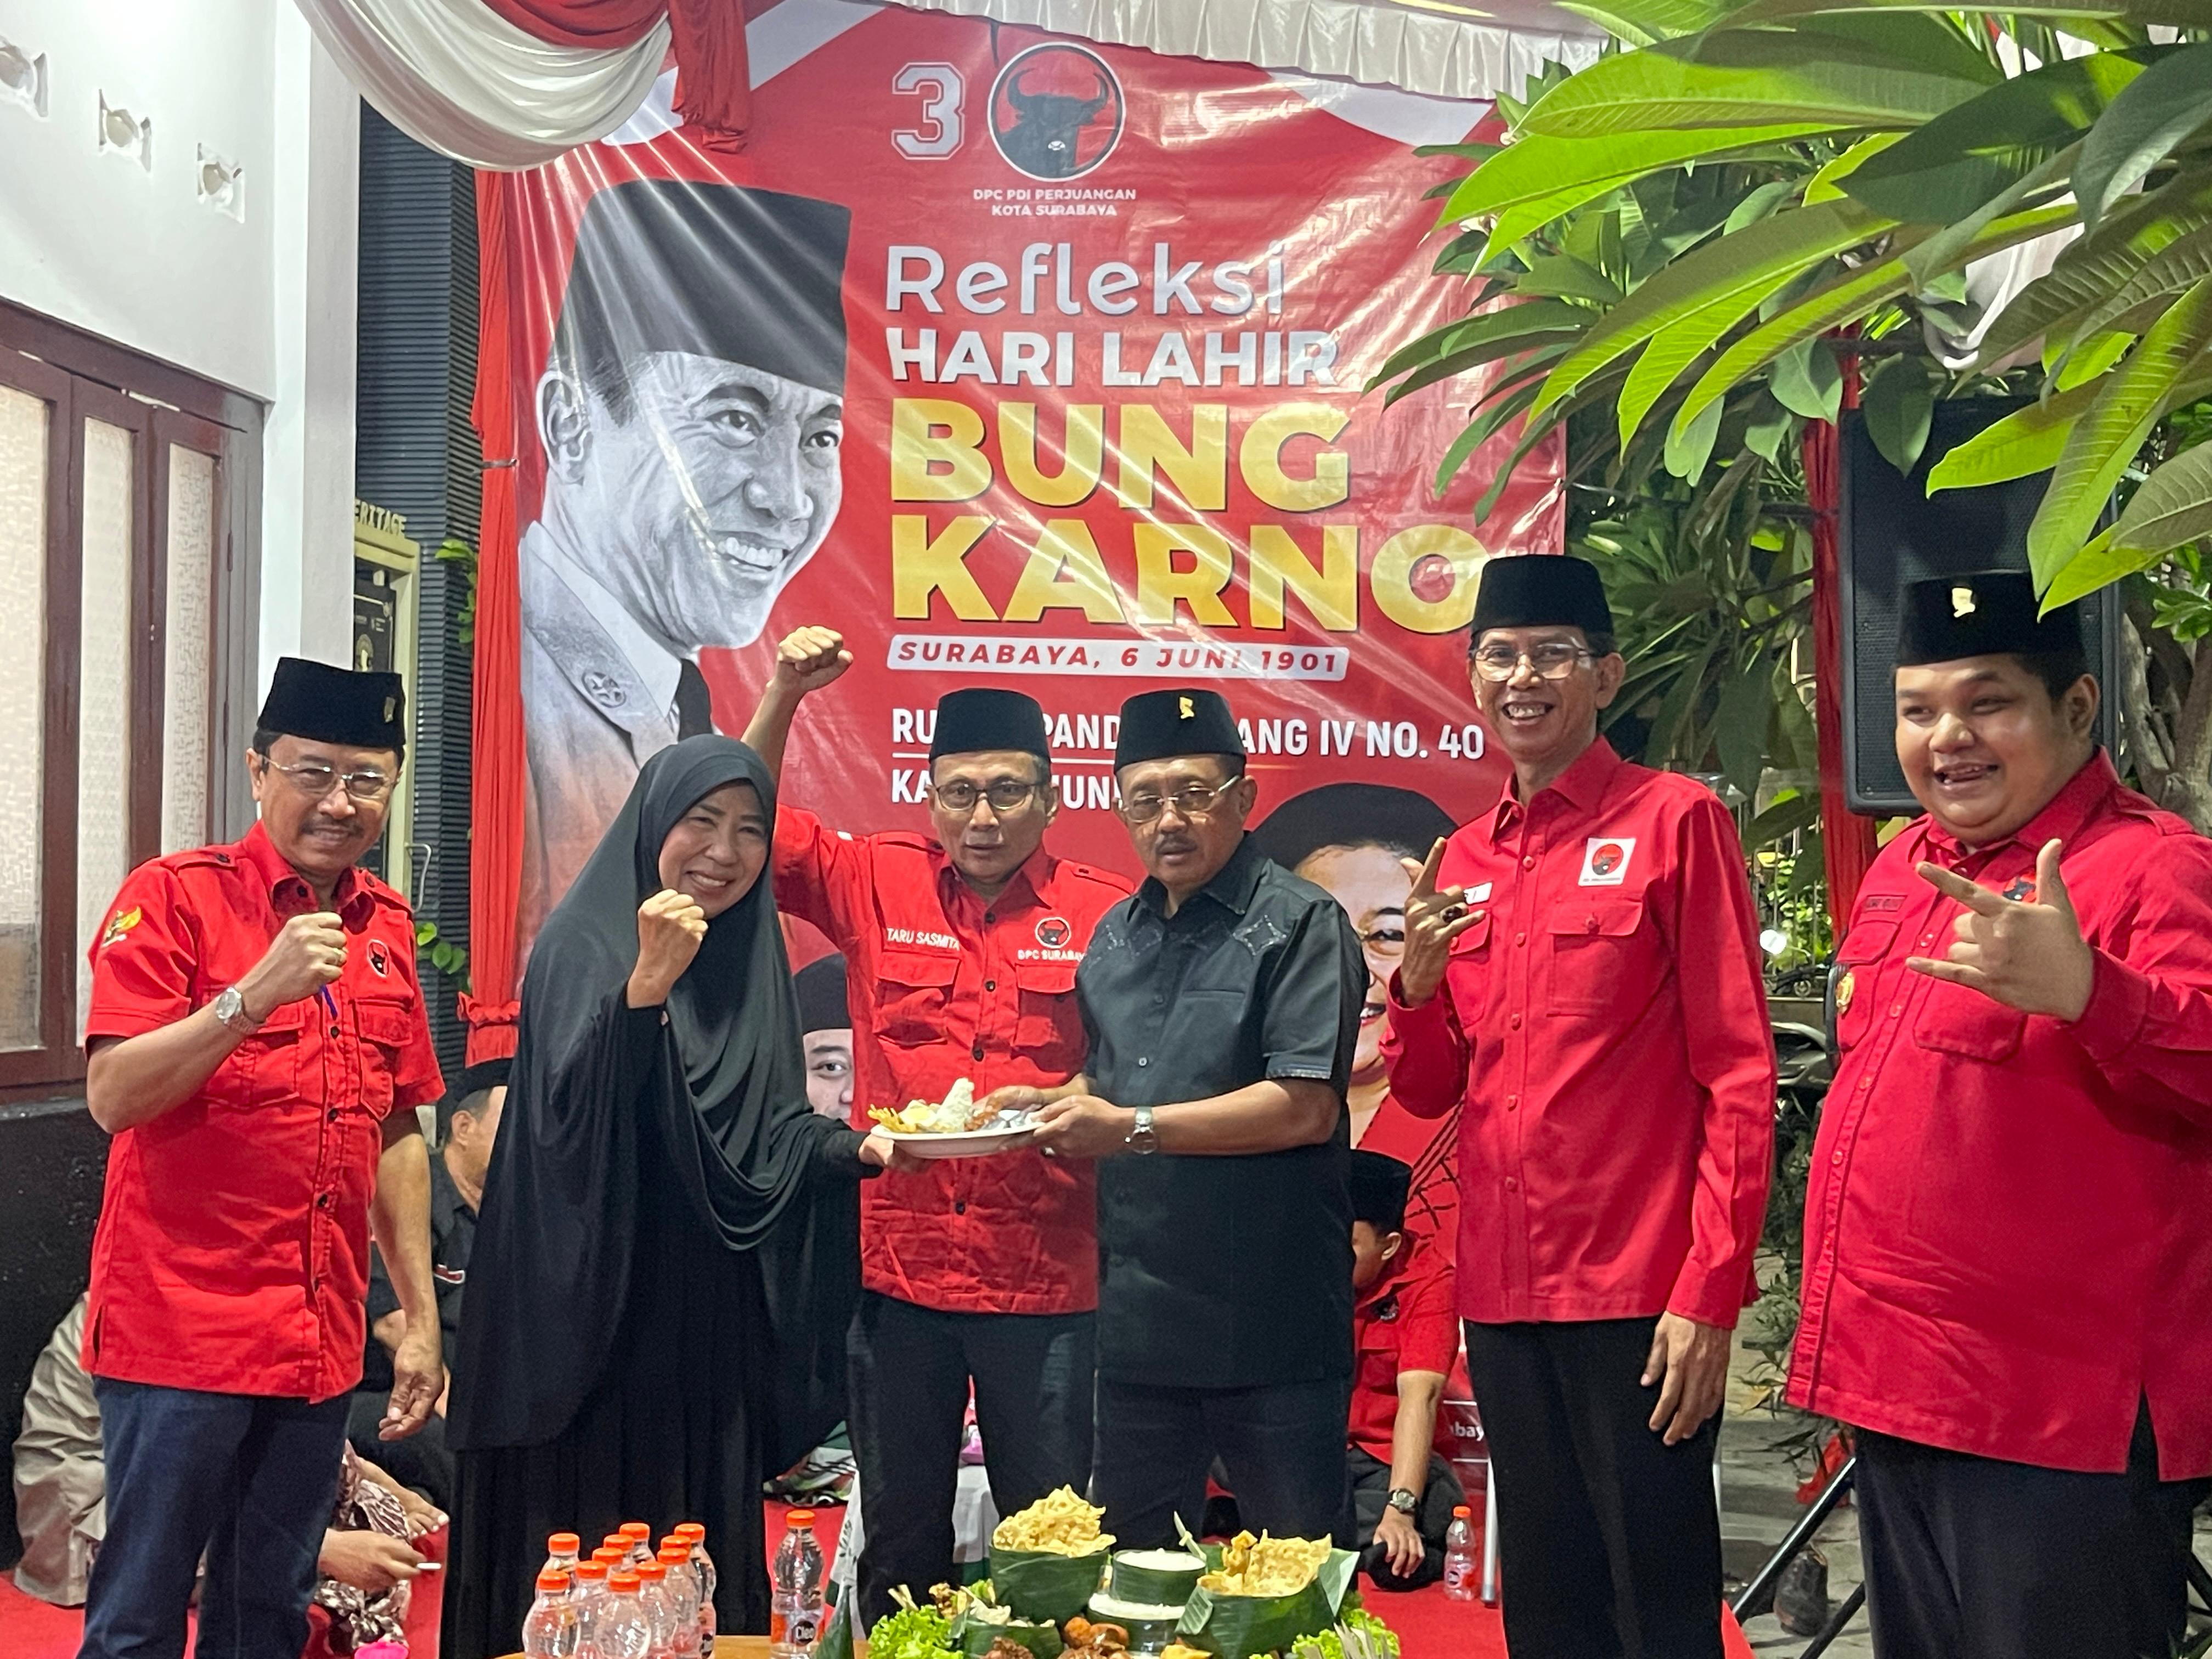 Juni Bulan Bung Karno, PDI-P Surabaya Gelar Refleksi Hari Kelahiran Sang Putra Fajar